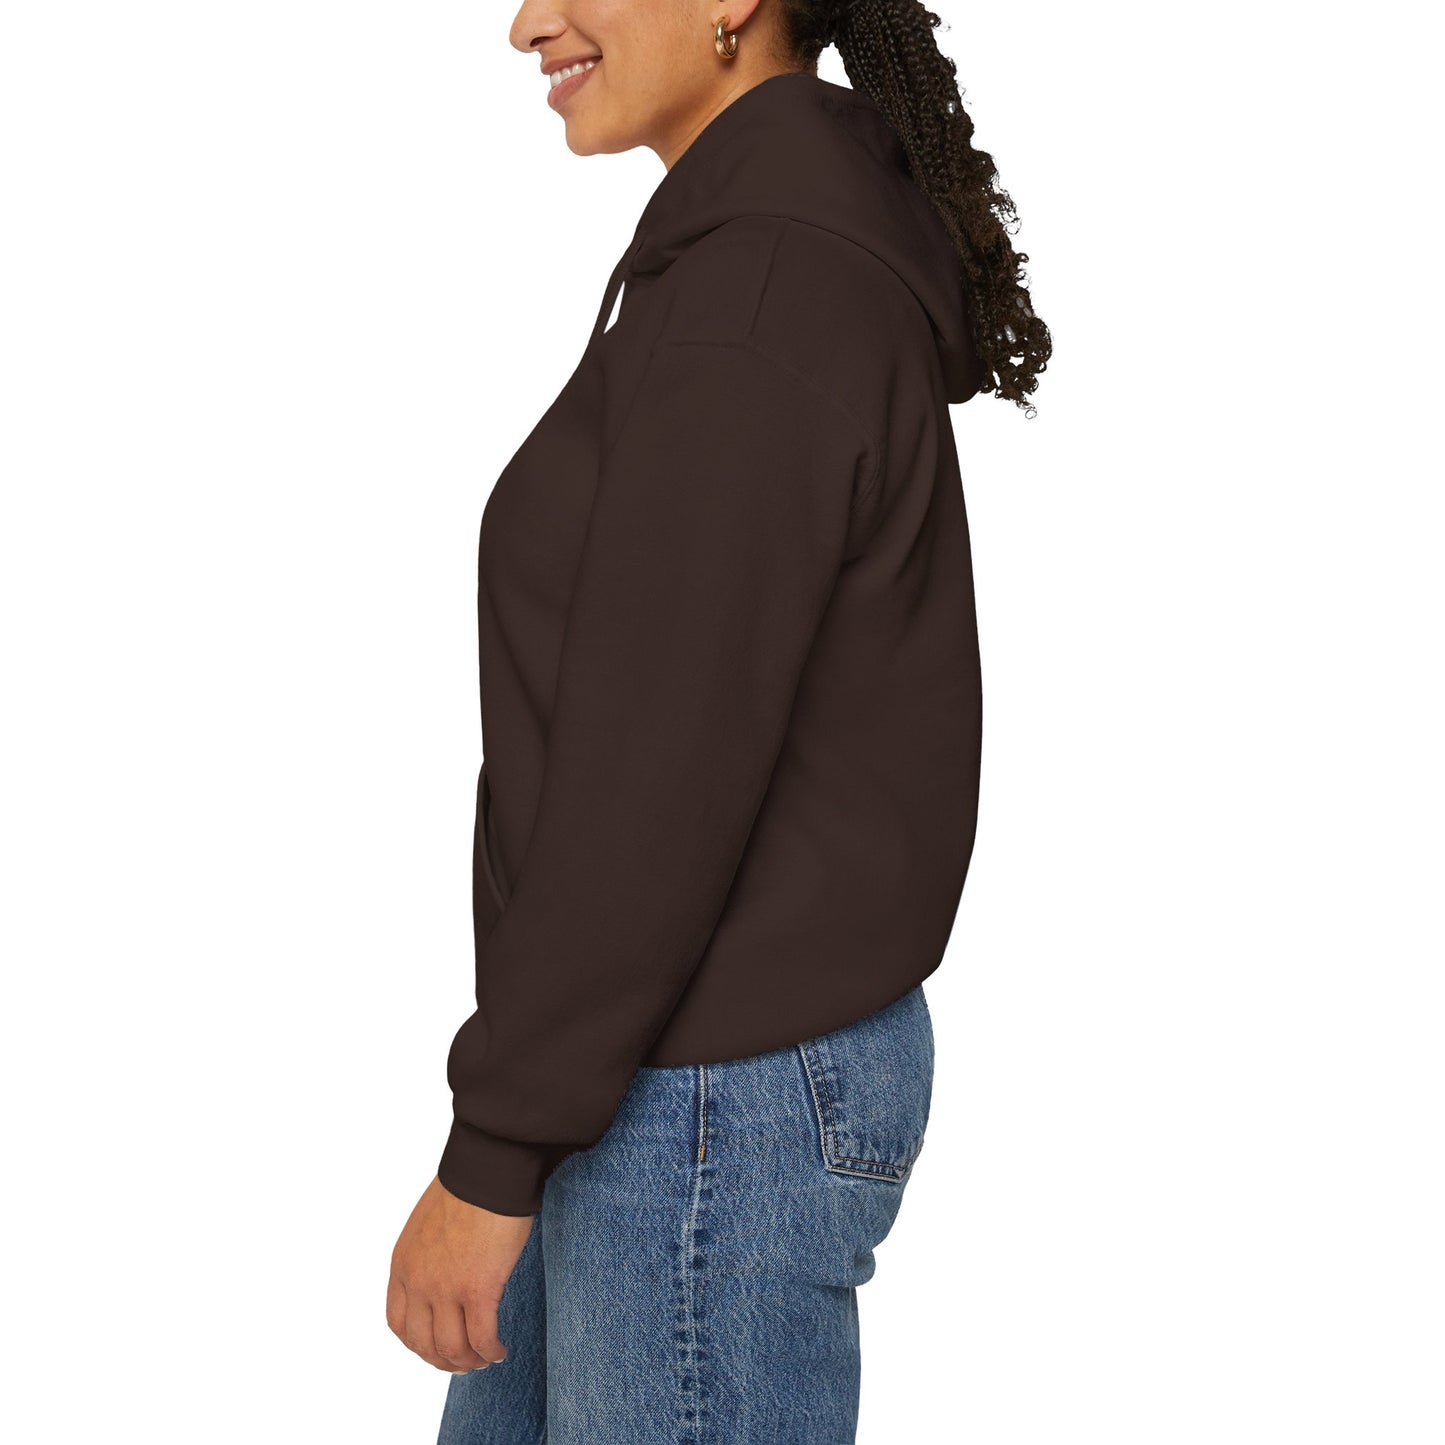 She's Armed And Dangerous Ephesians 6:10 Women's Christian Hooded Pullover Sweatshirt